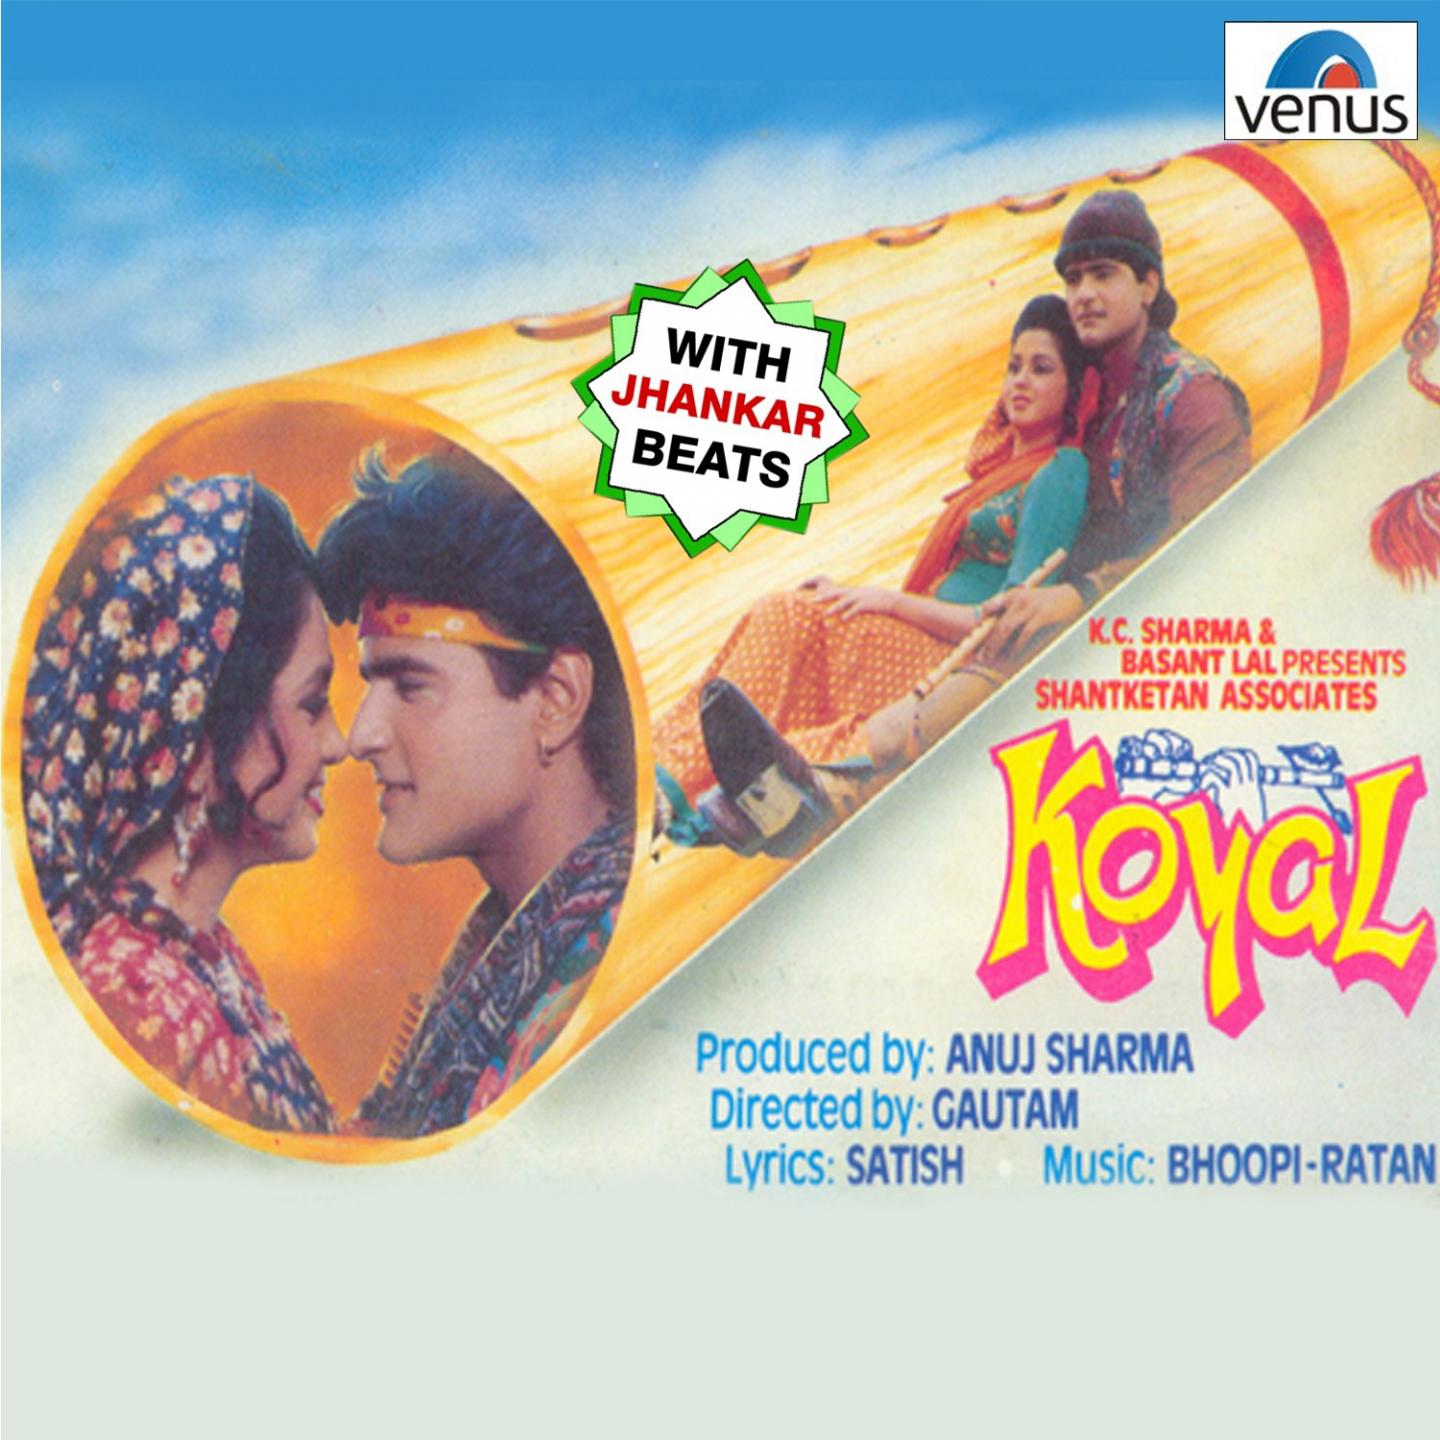 Koyal (With Jhankar Beats) (Original Motion Picture Soundtrack)